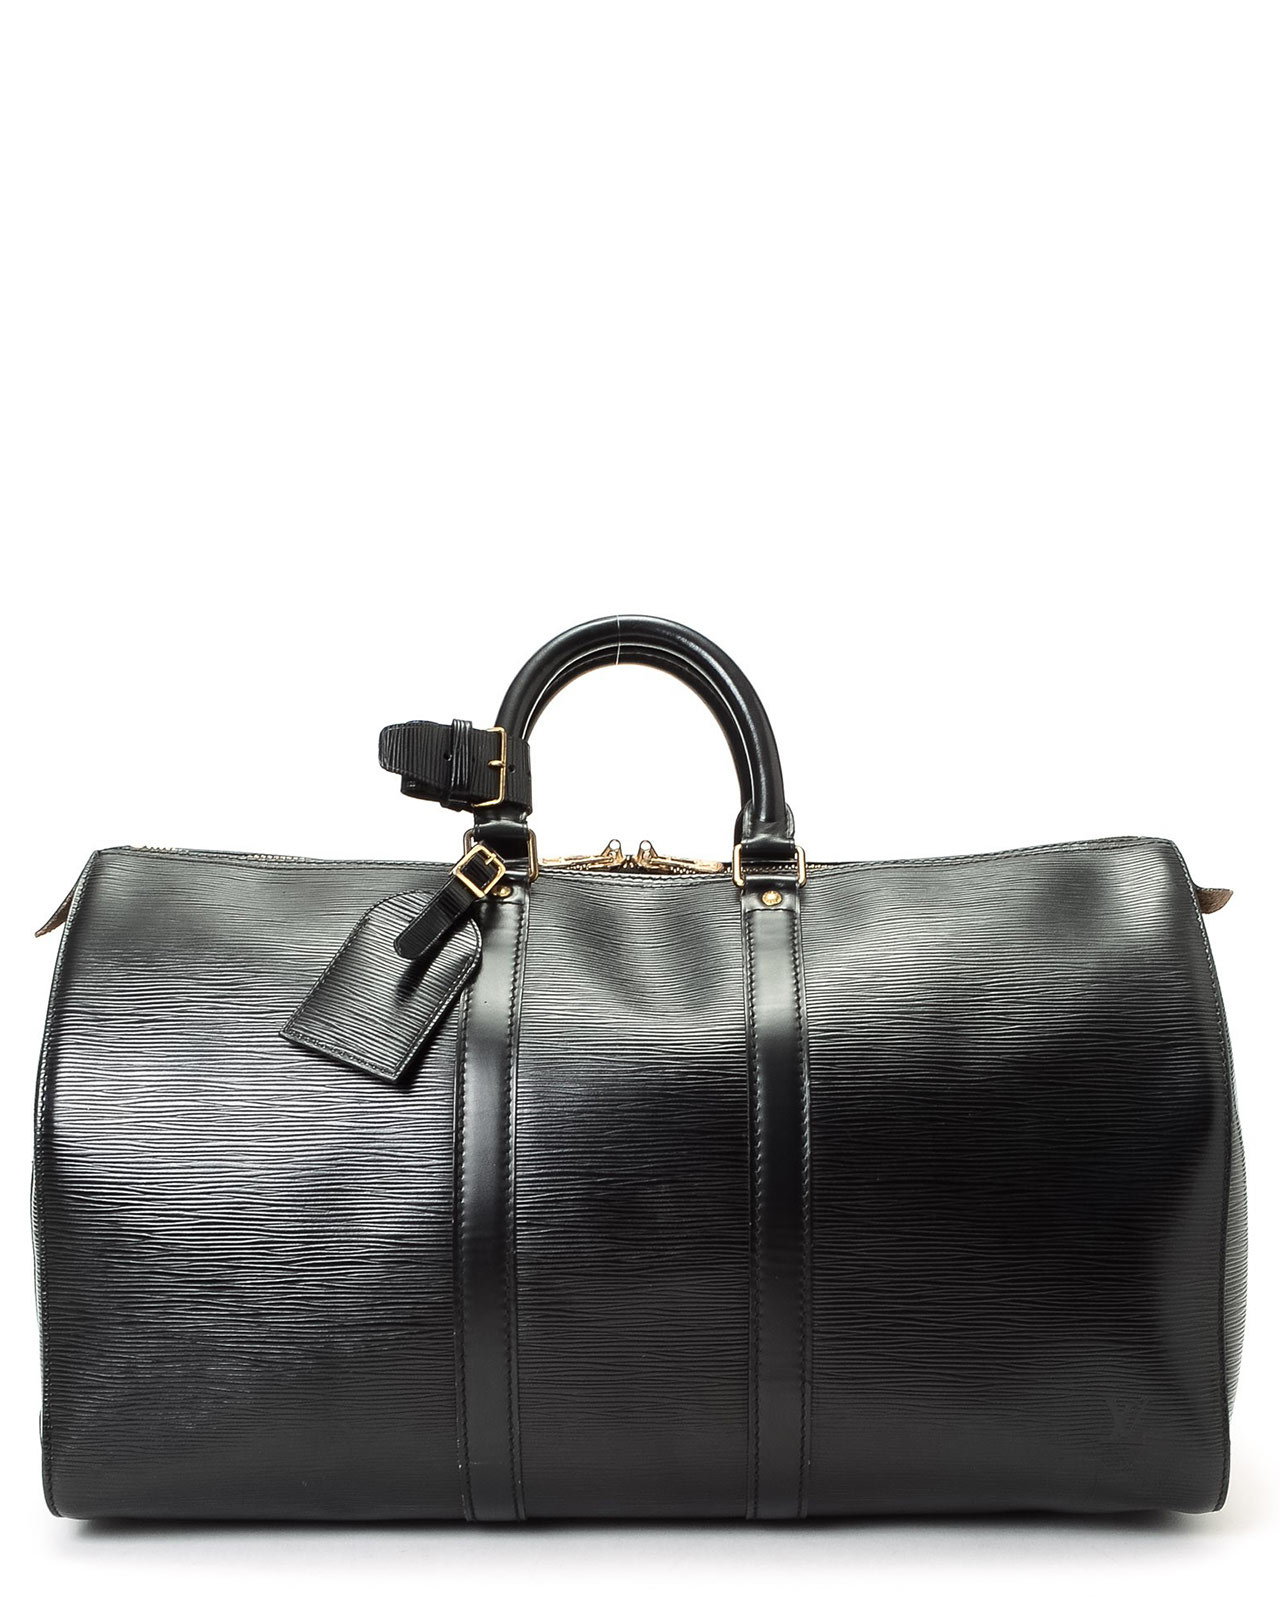 Lyst - Louis Vuitton Black Keepall 45 Bag in Black for Men